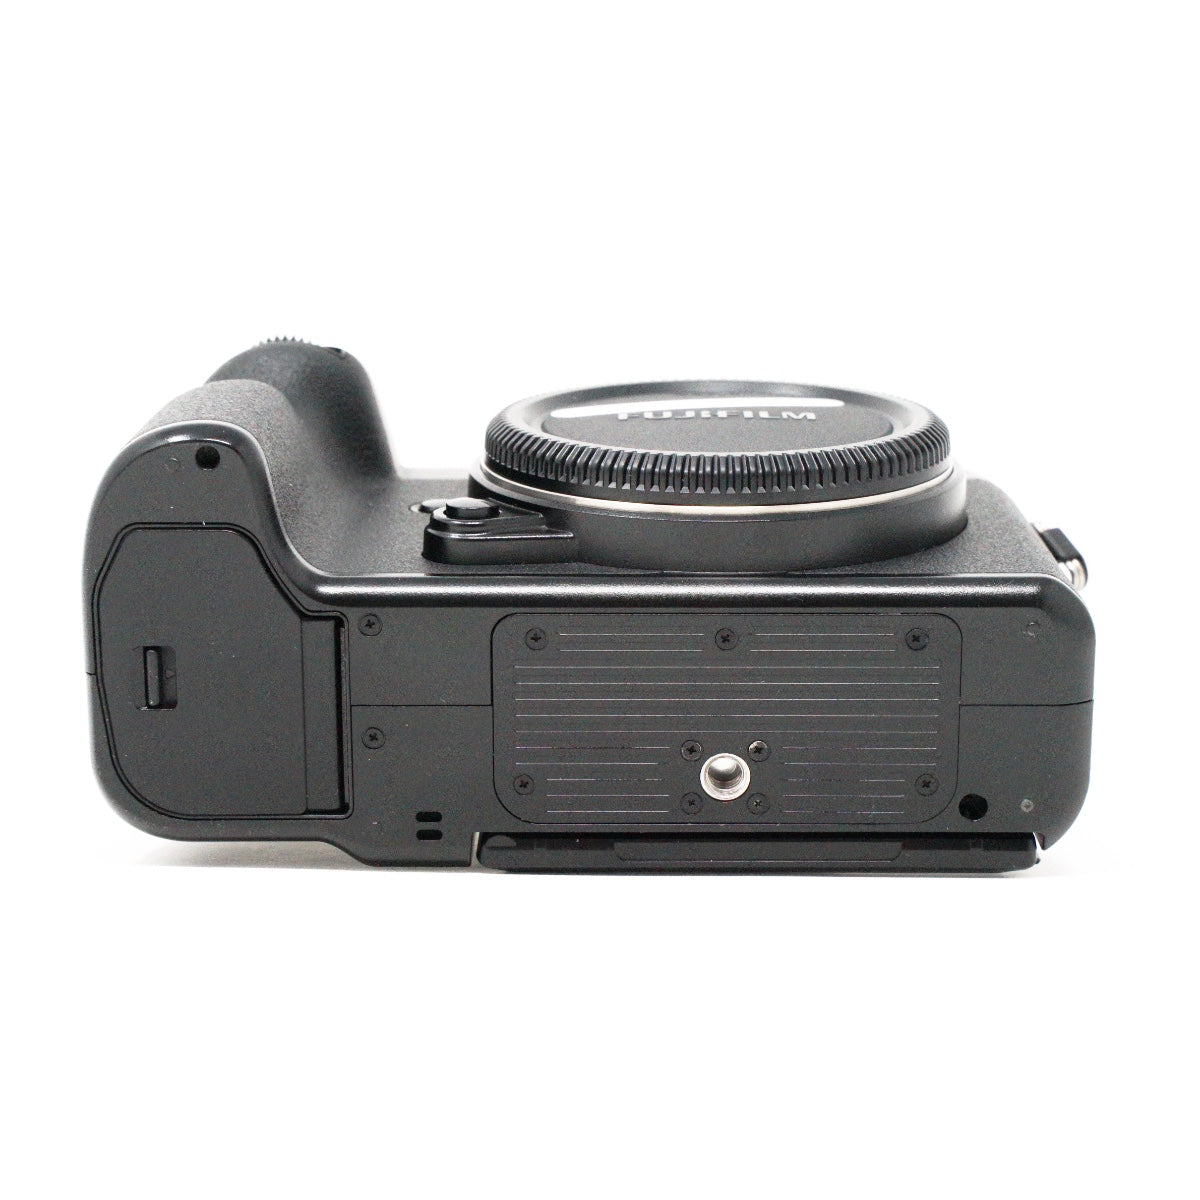 USED Fujifilm GFX 50S II Medium Format Camera with 35-70mm Lens 